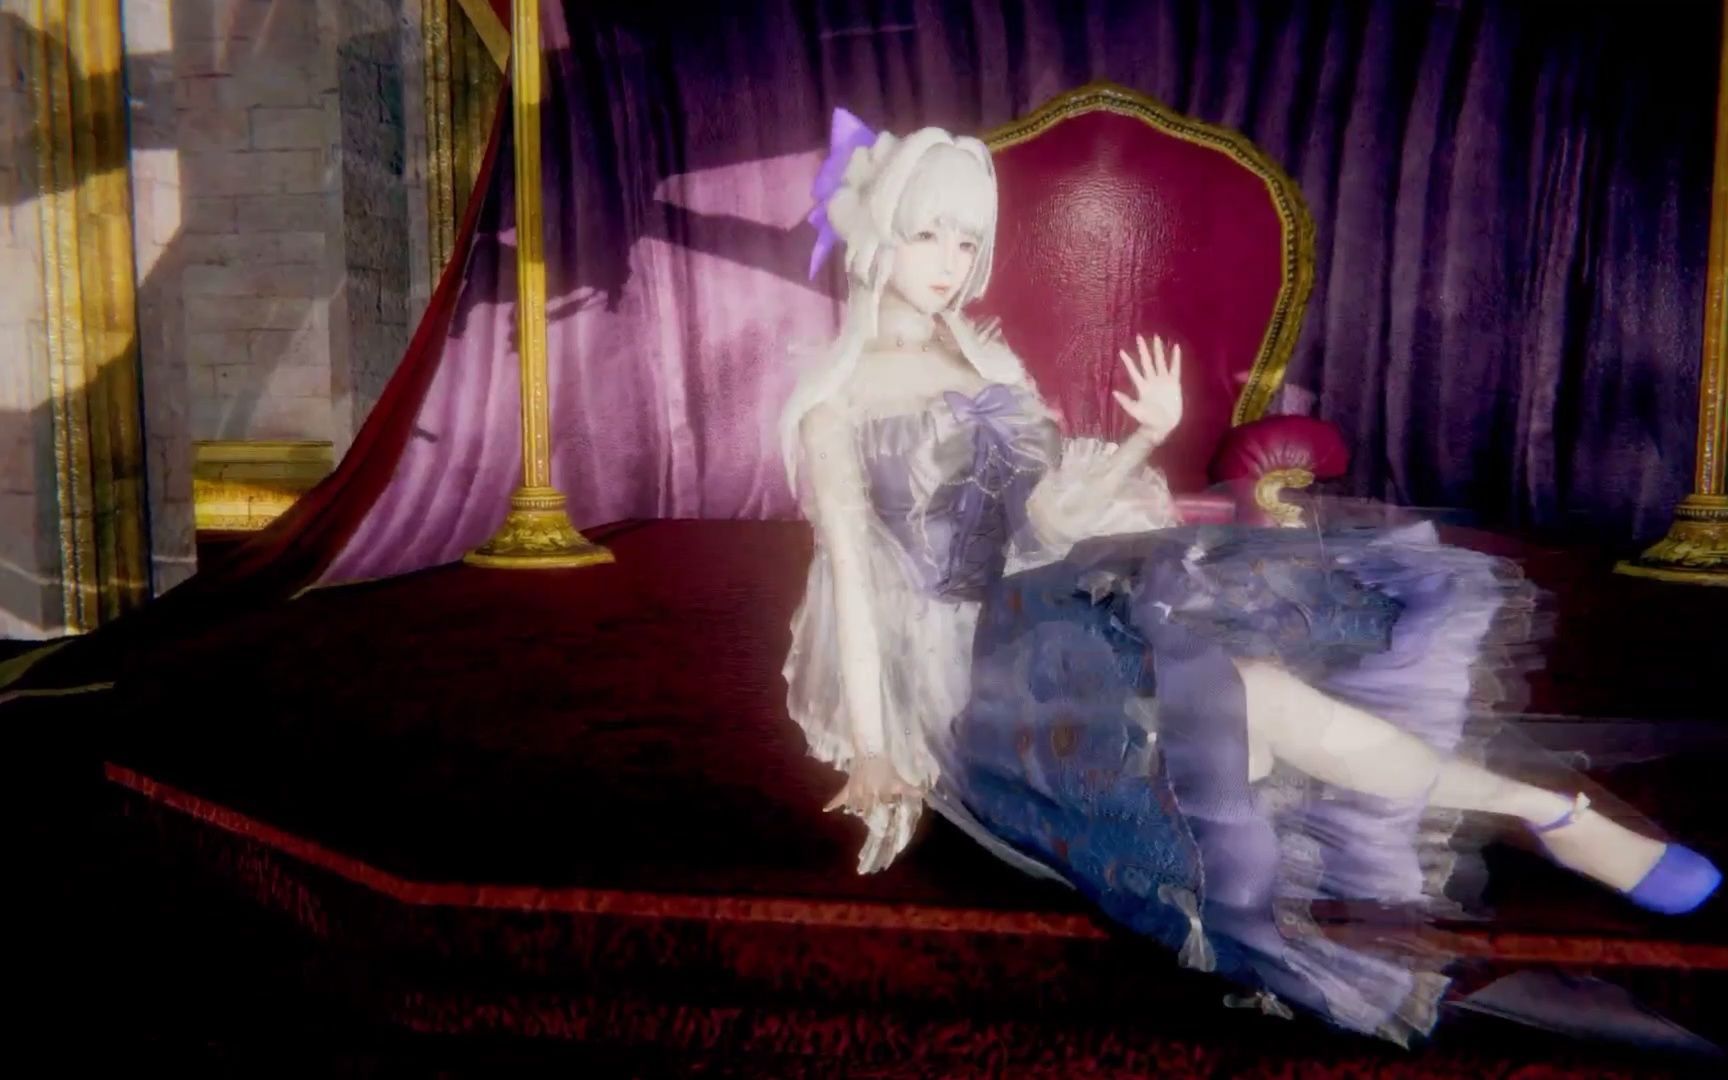 HS2/甜心选择2   人物VR视角  美丽公主漂亮舞蹈  不居家的第二天 上班累